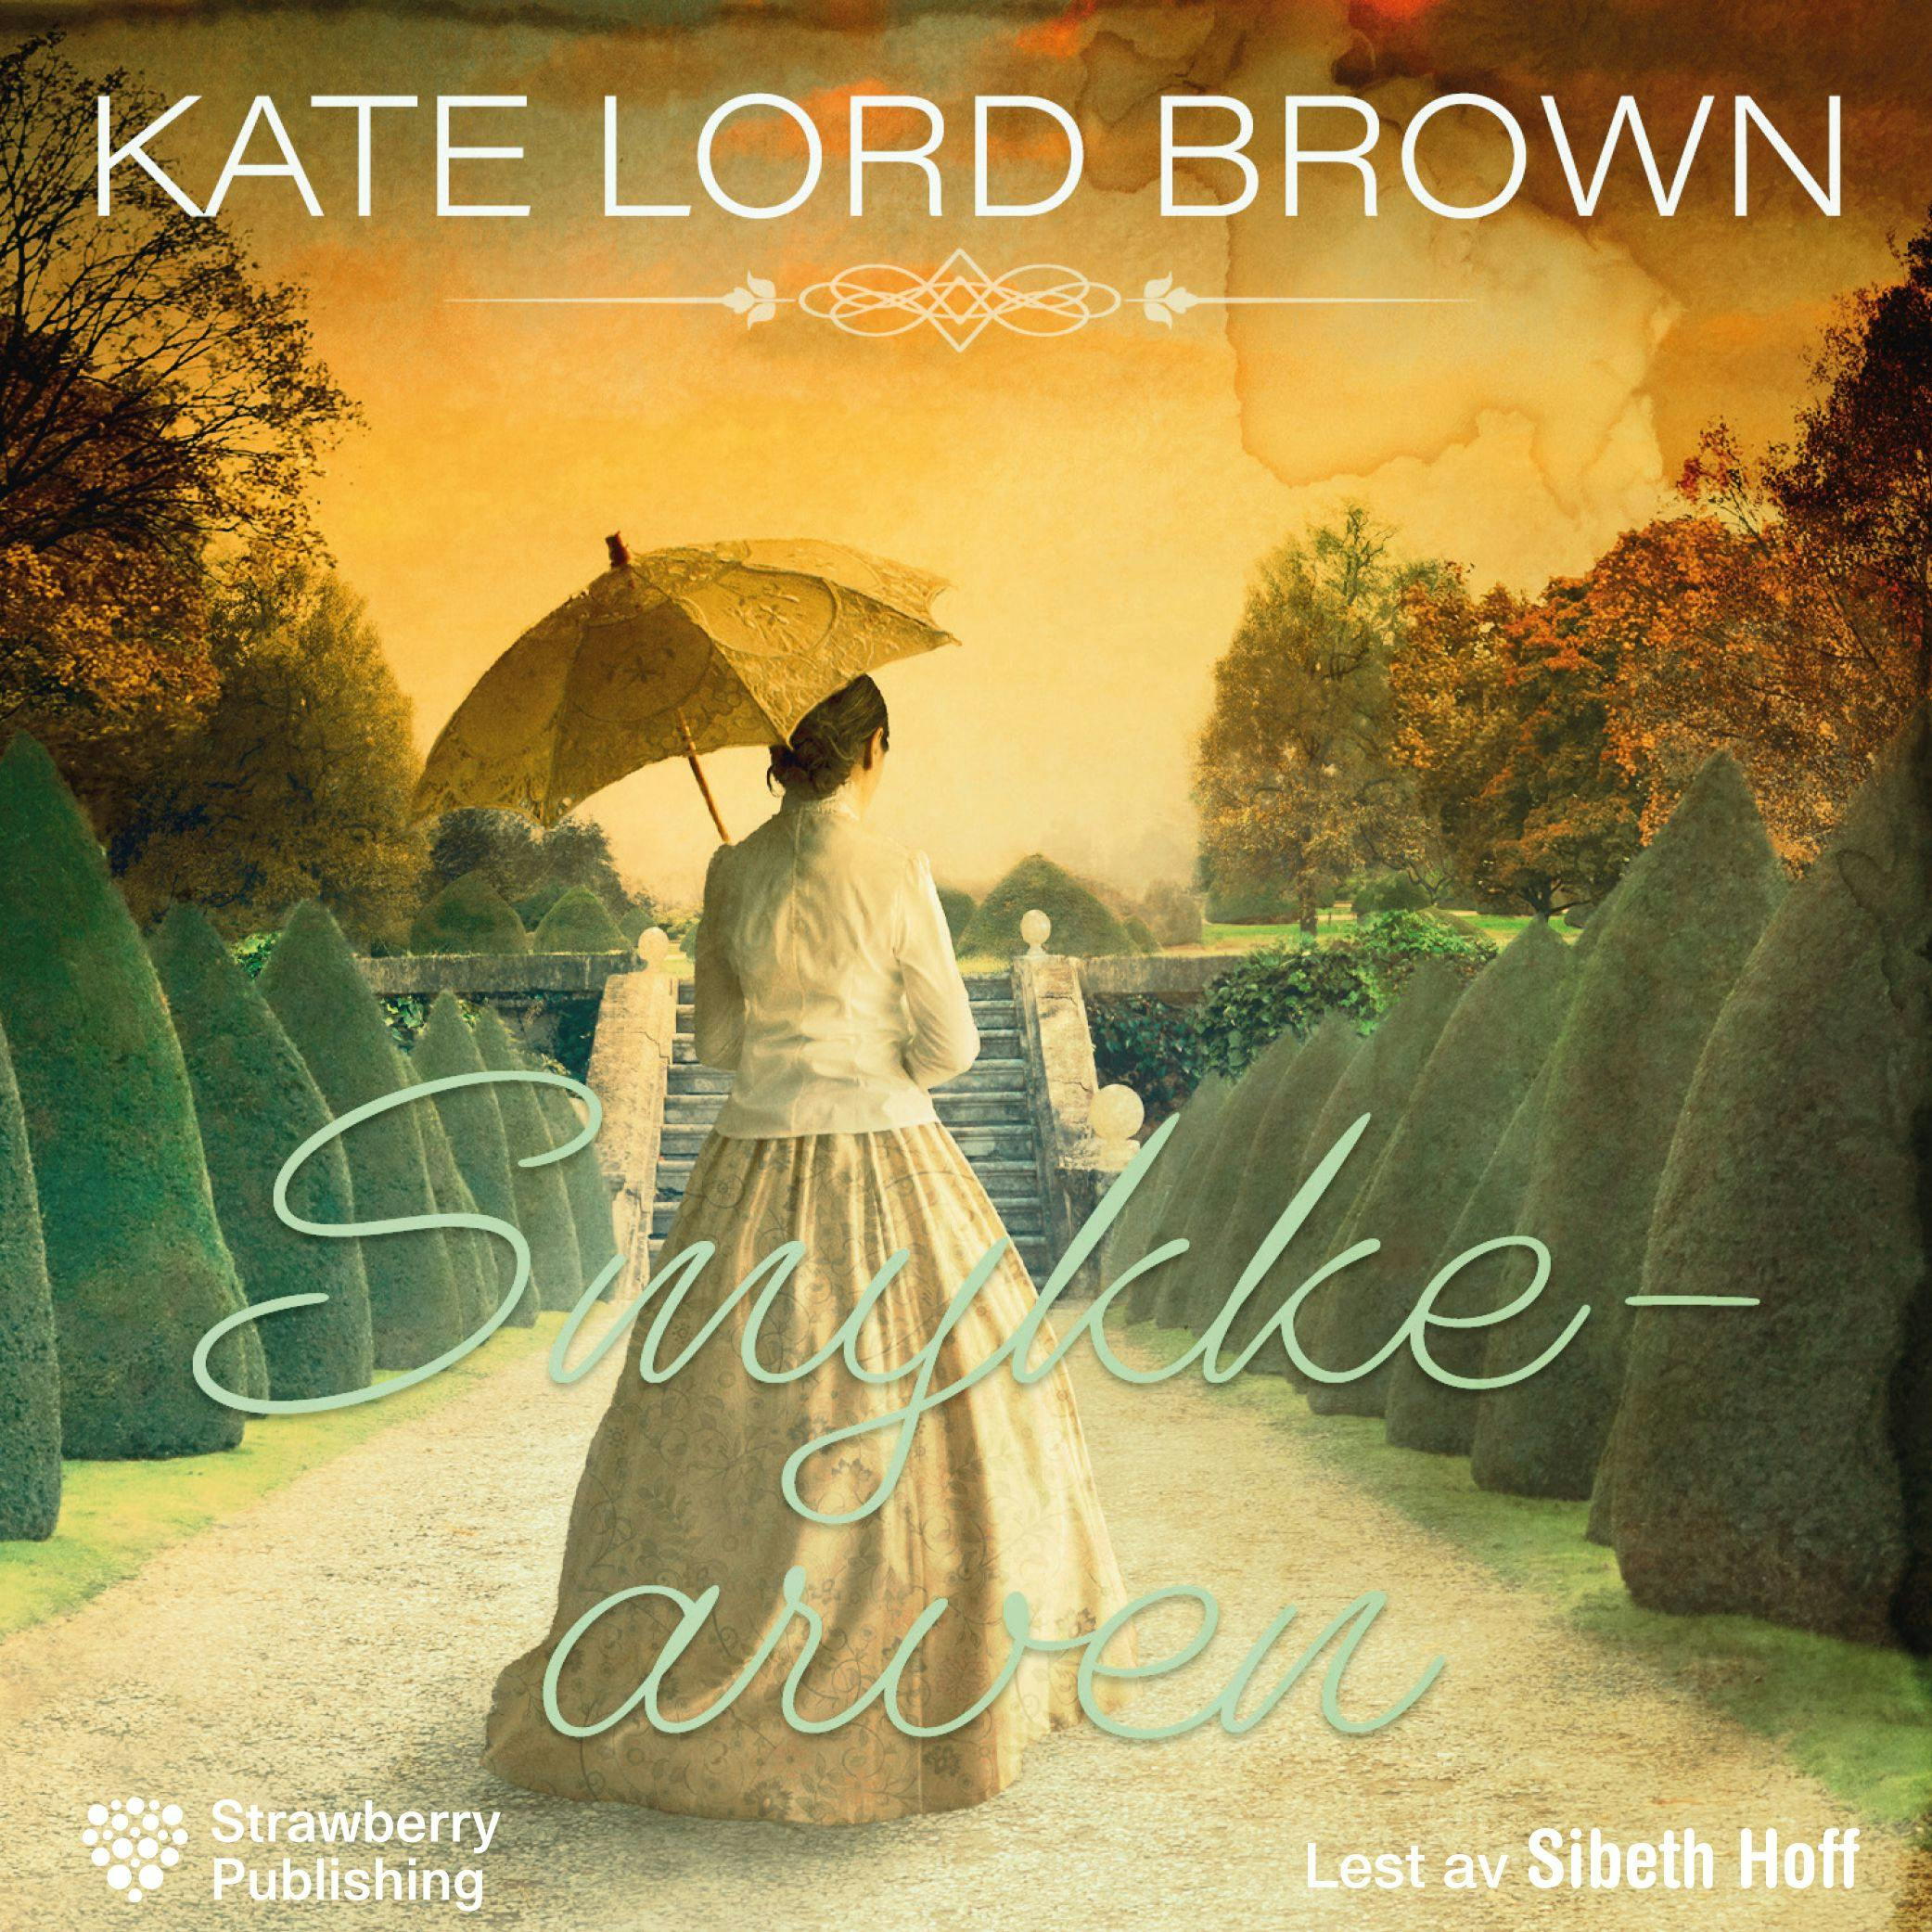 Smykkearven - Kate Lord Brown